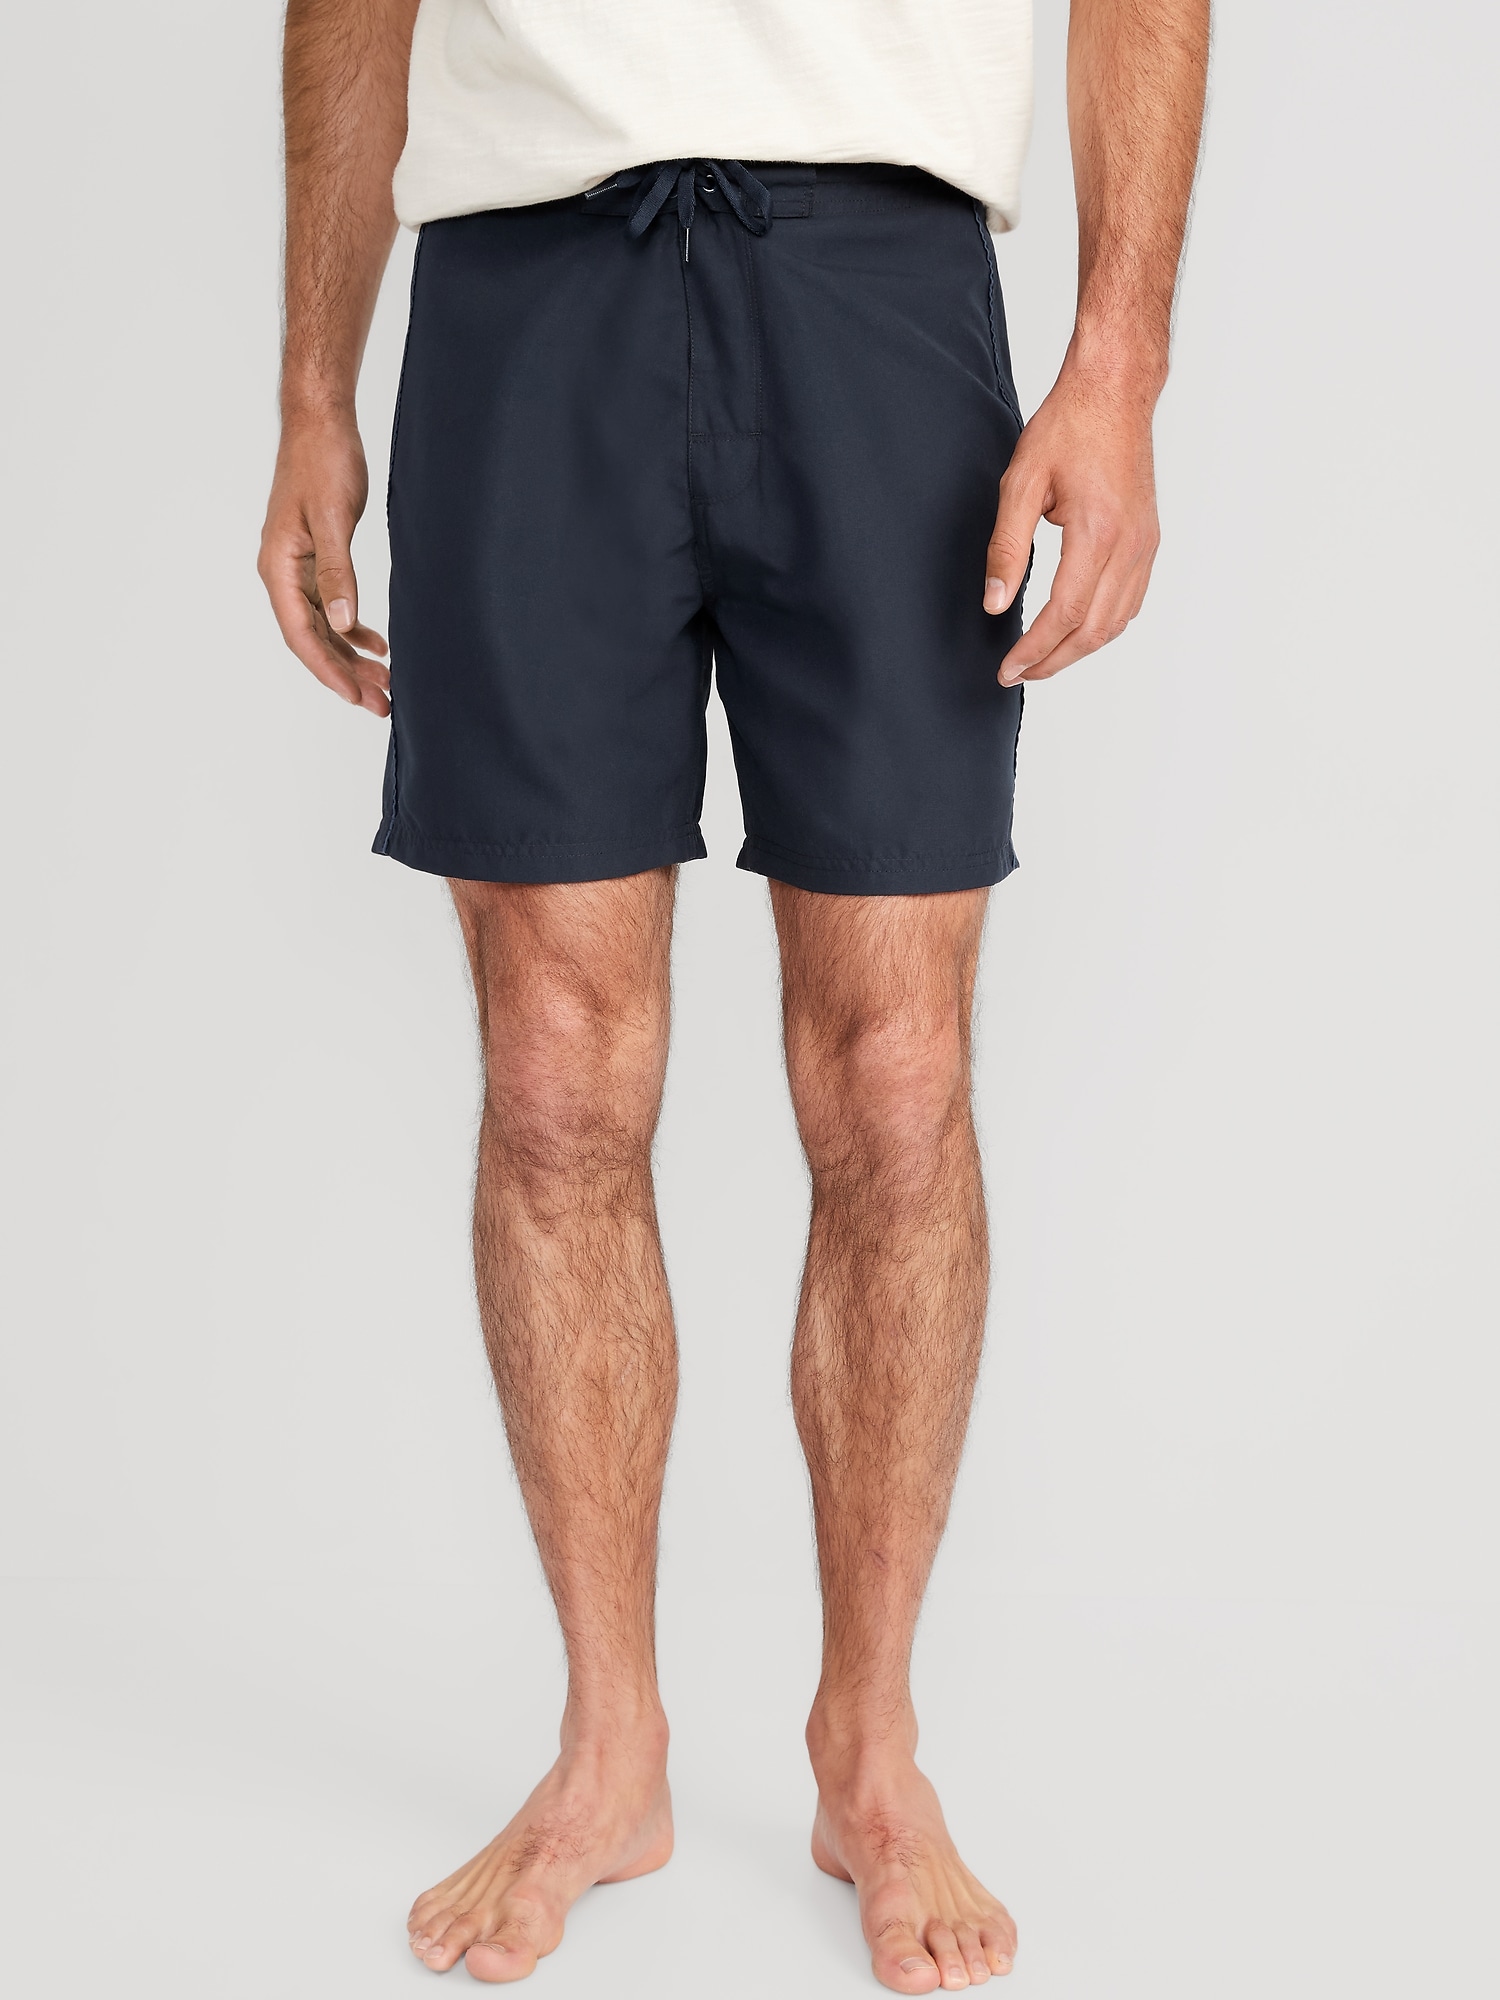 Beach Shorts for Men